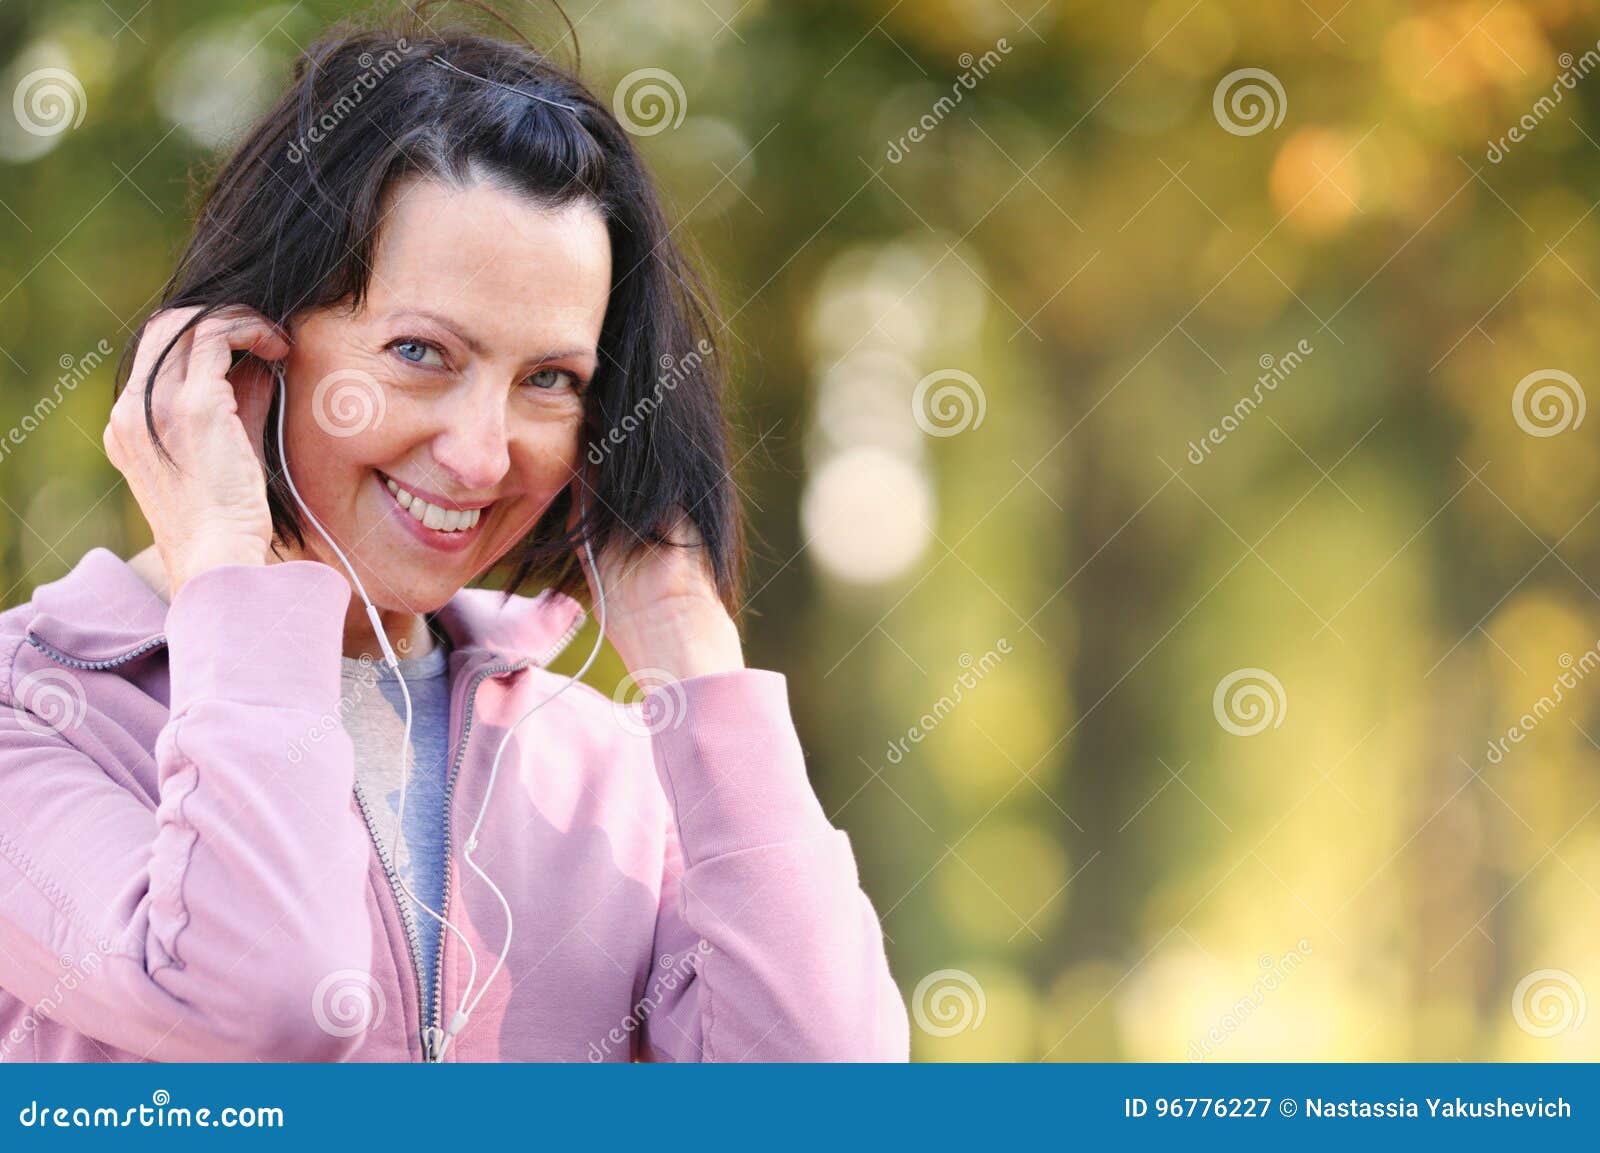 portrait of elderly woman prepare to jog with headphones in the park